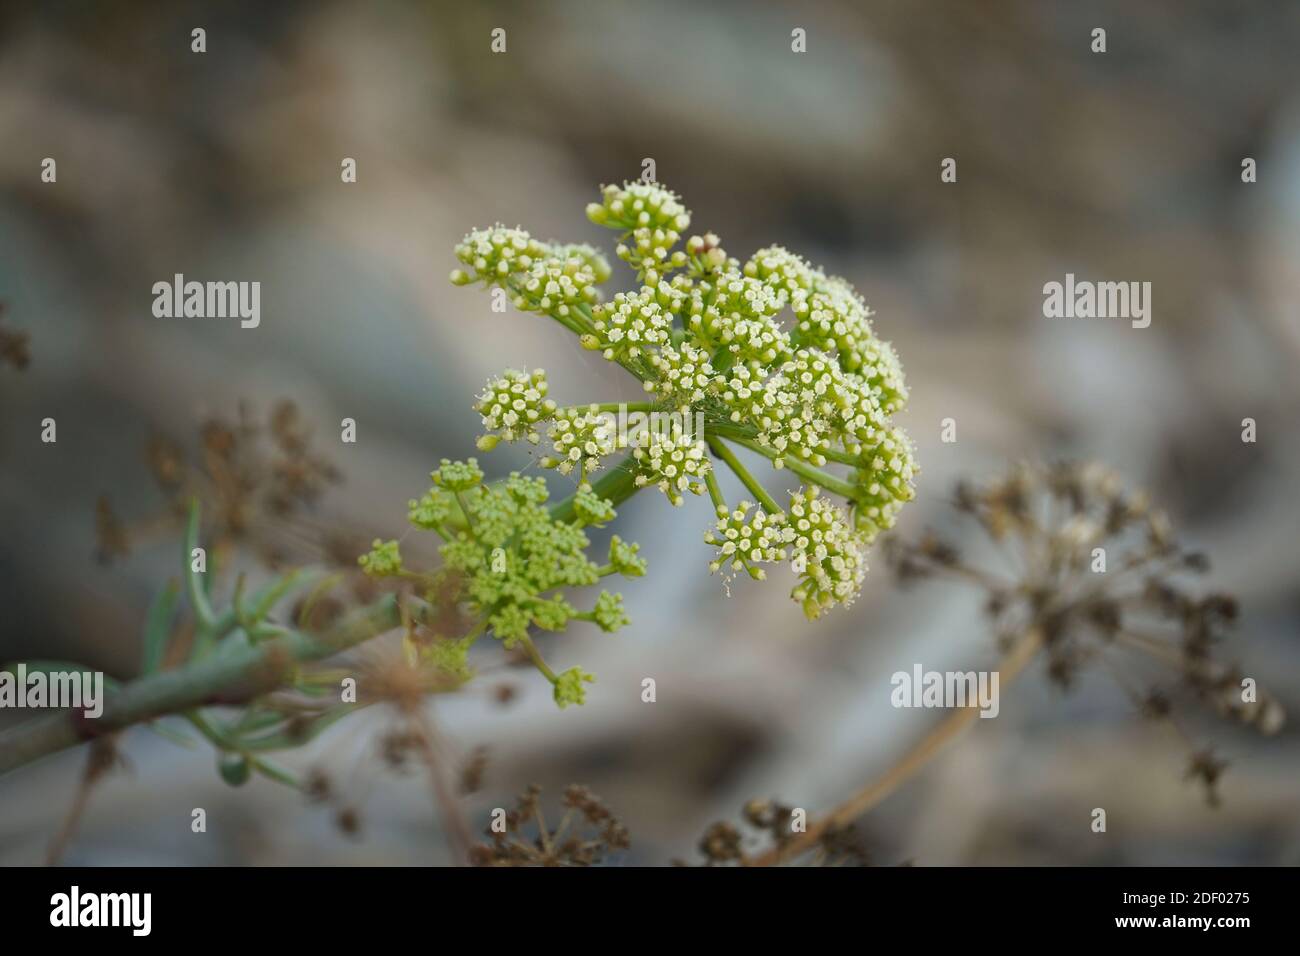 Zafiro de roca, planta silvestre comestible, hinojo de roca, cristmum maritimum) en el mar, Andalucía, España. Foto de stock